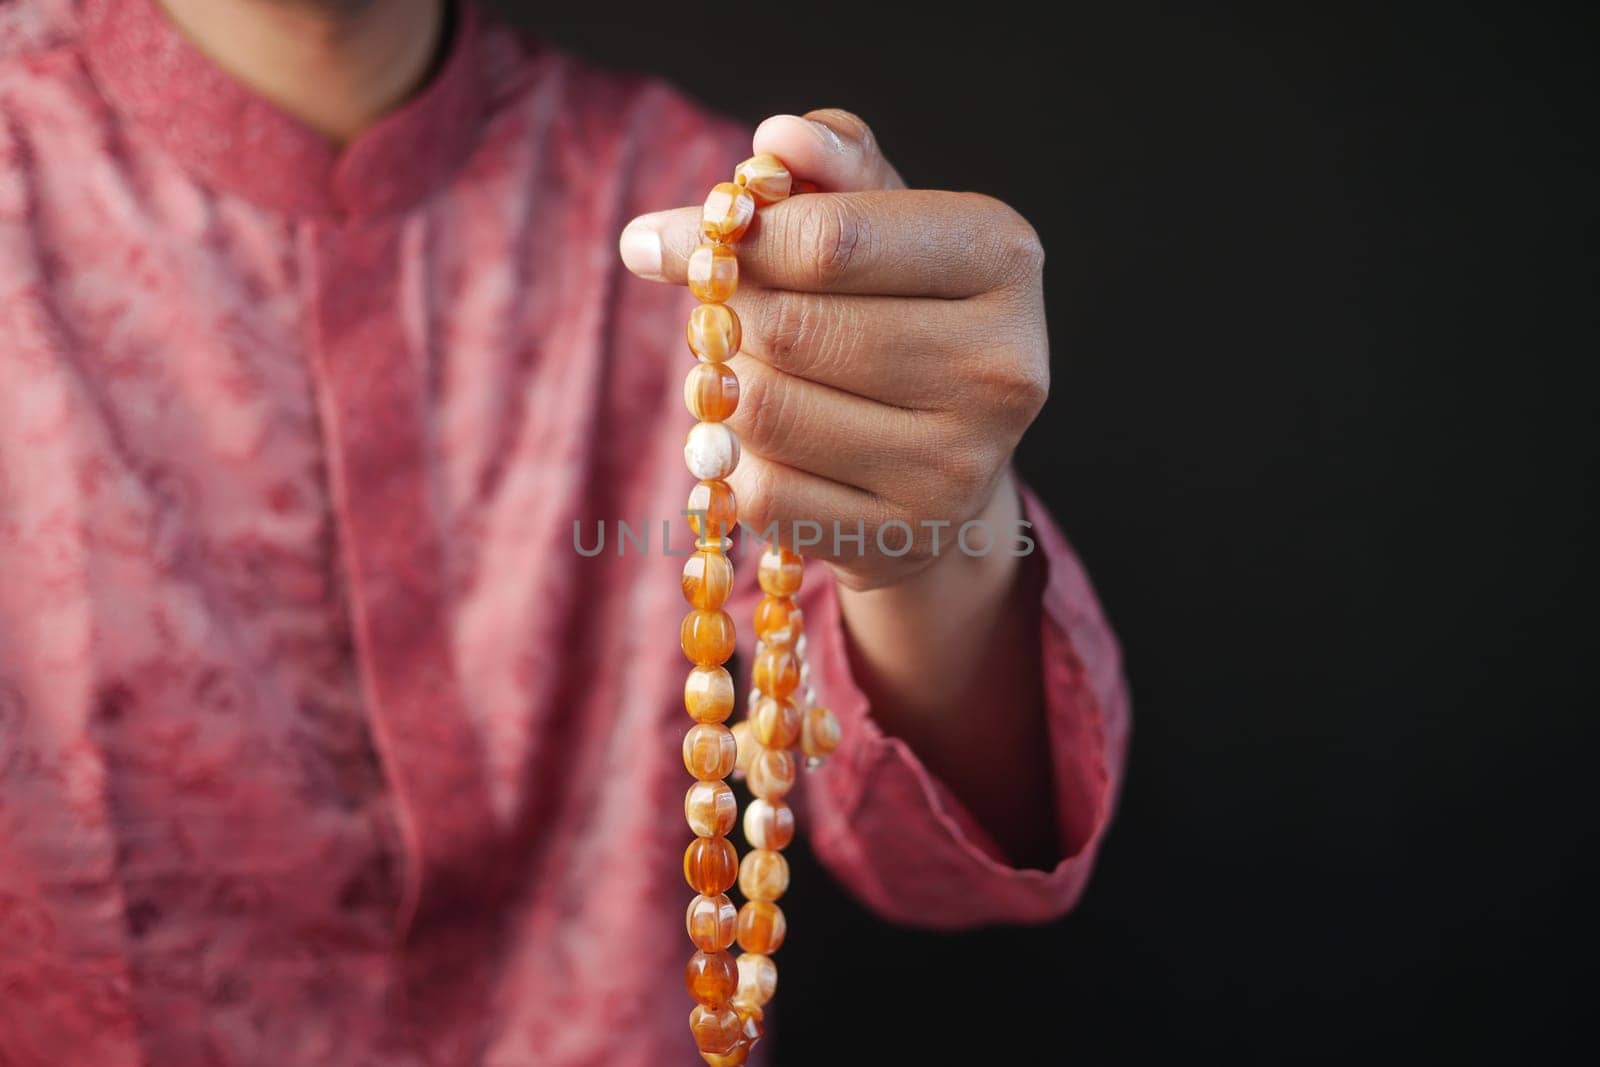 muslim man keep hand in praying gestures during ramadan, Close up by towfiq007